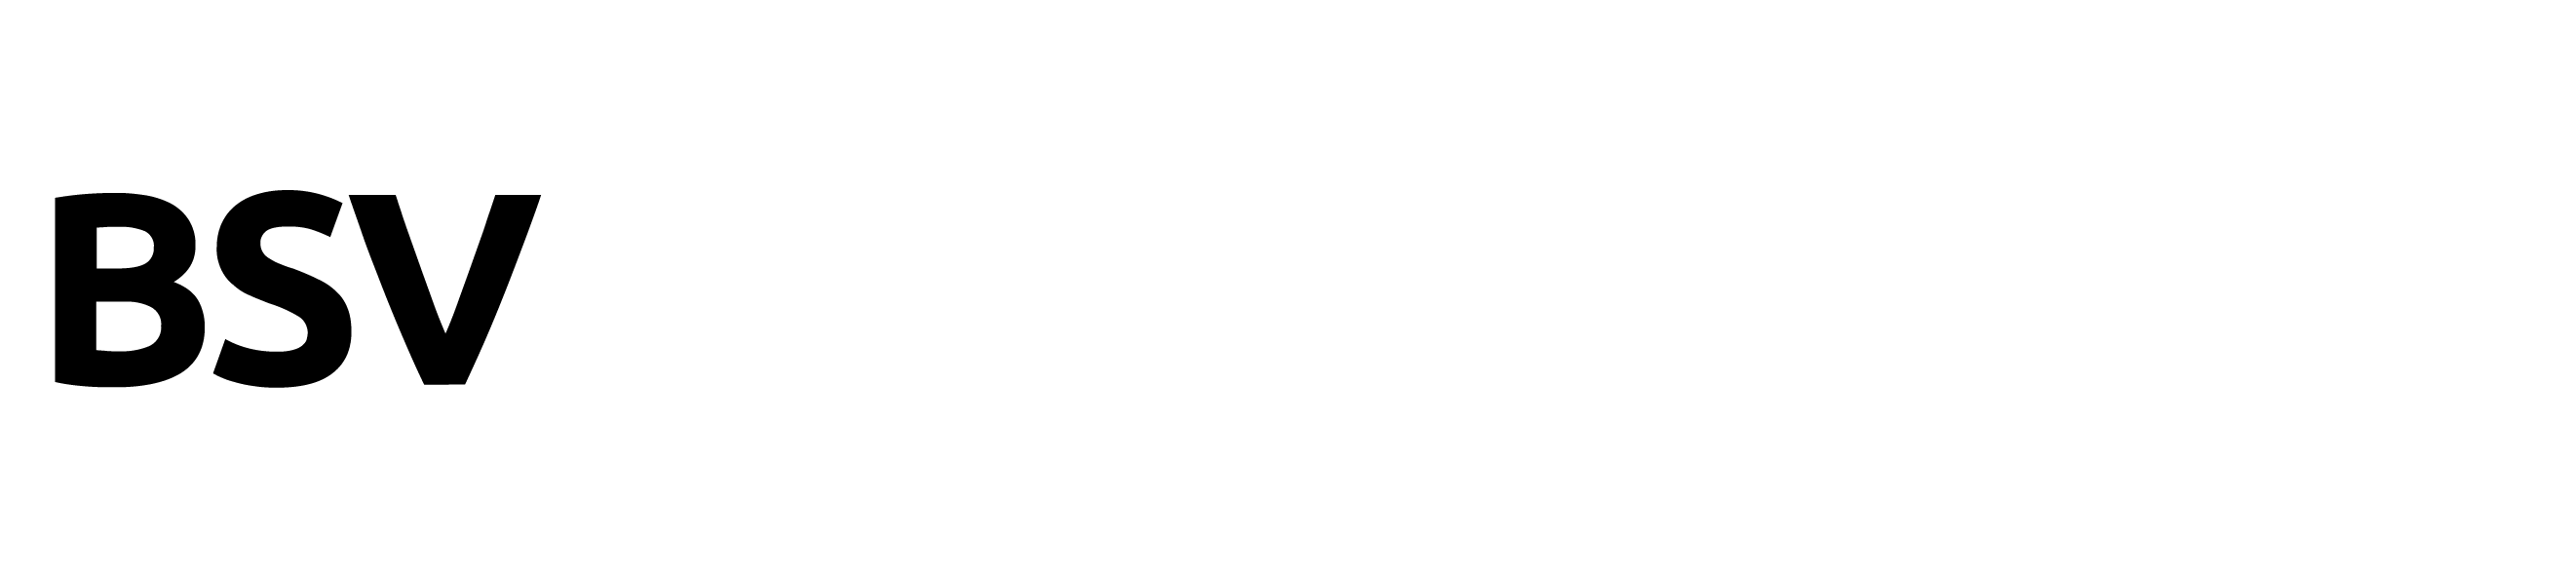 Bitcoin Association